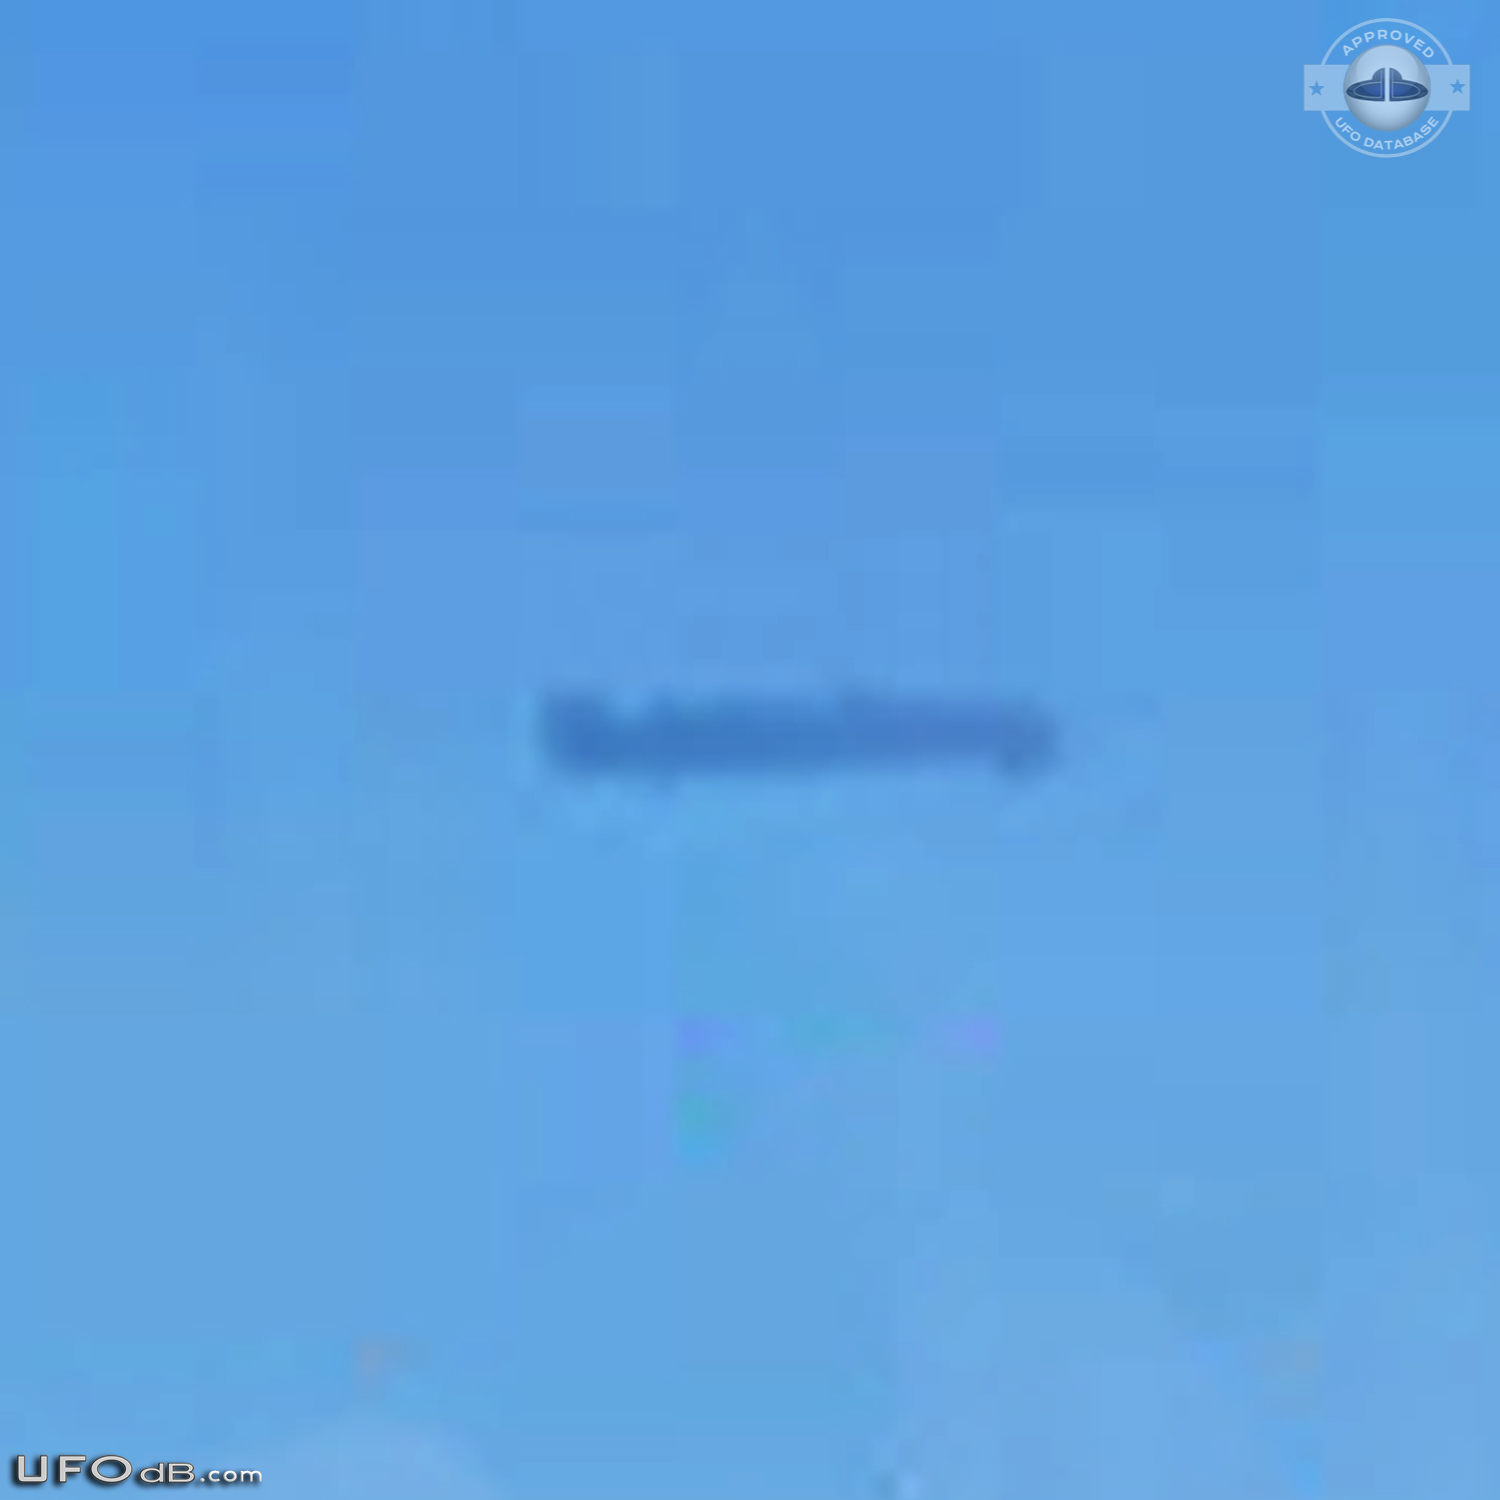 300 M Cylinder UFO Sky Dreadnaught near Russia/Ukraine Conflict - 2014 UFO Picture #559-5